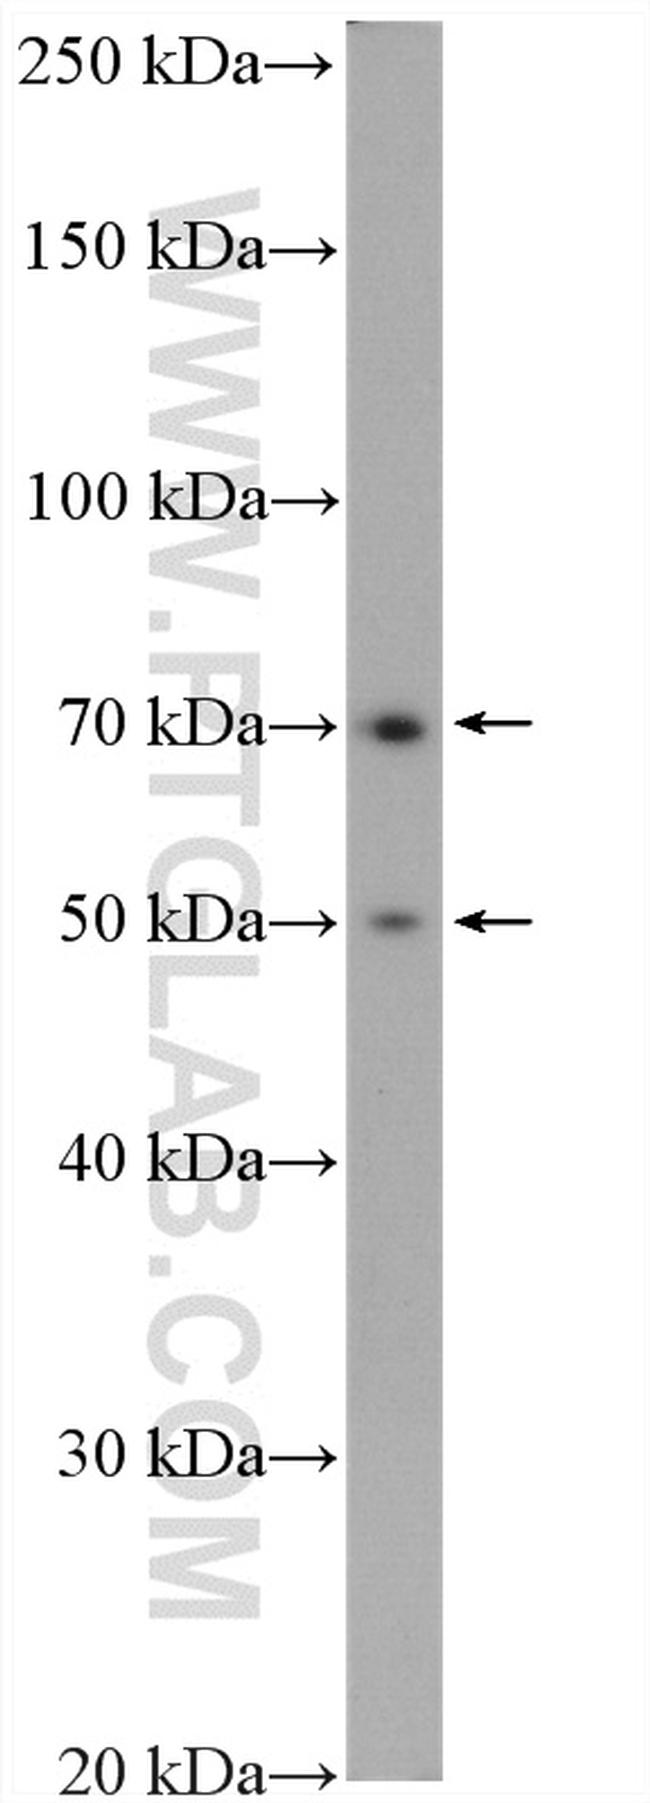 PADI2 Antibody in Western Blot (WB)